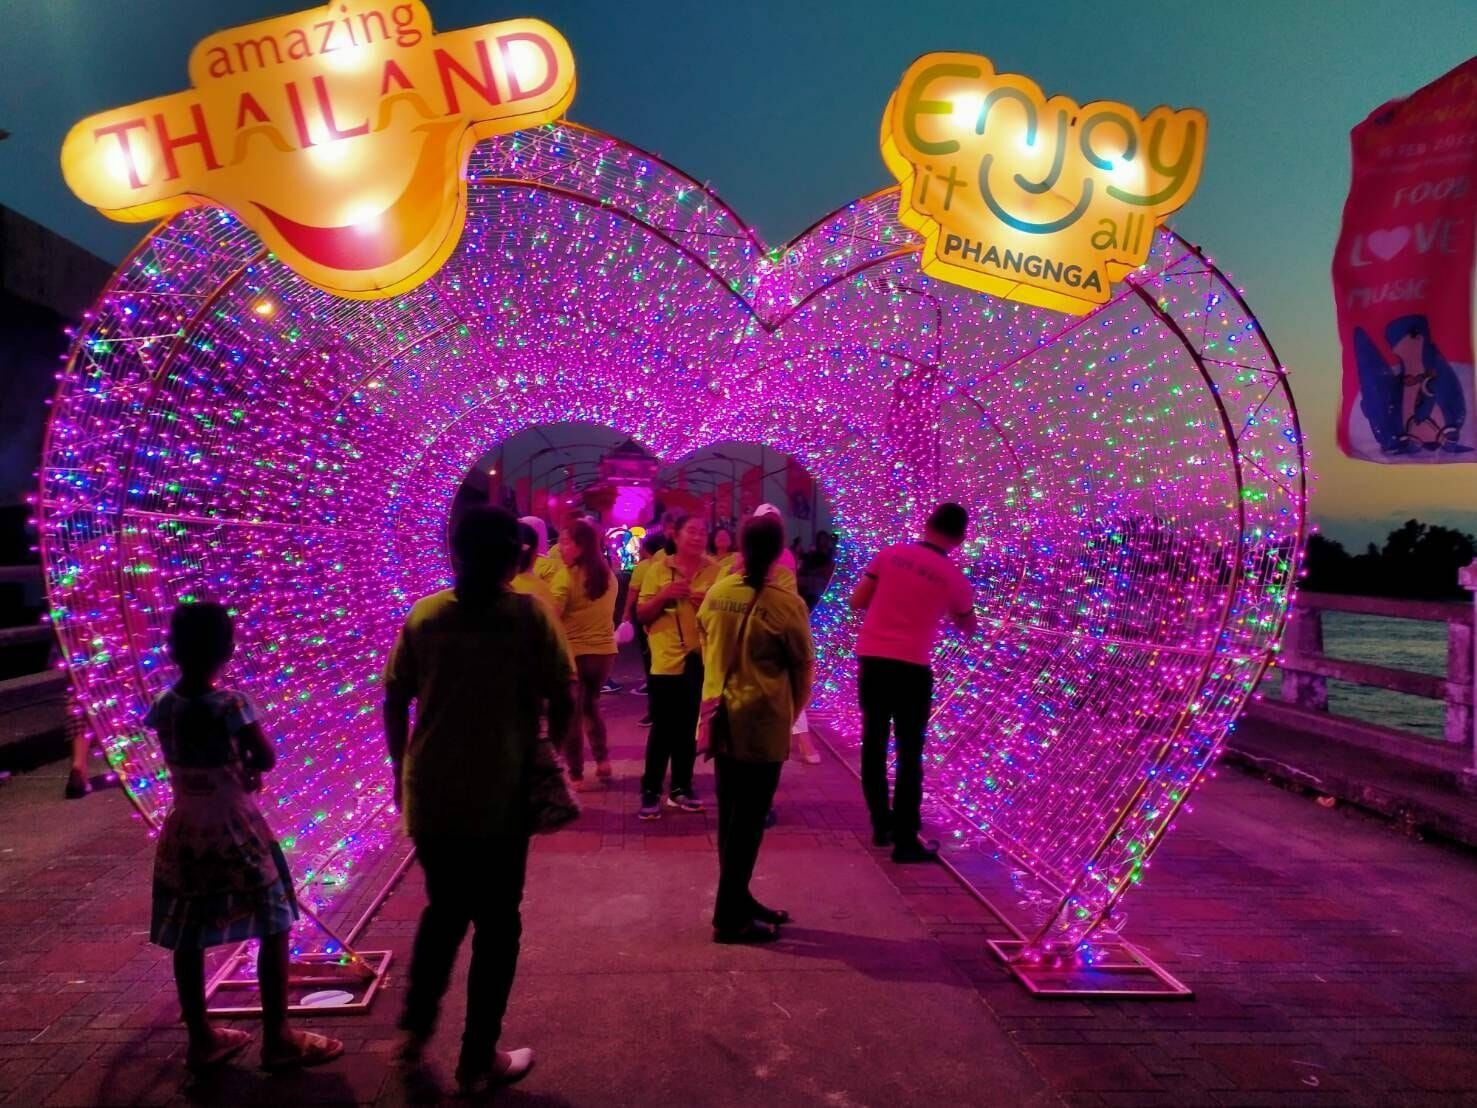 Festival coming up at Sarasin Bridge in Phuket and Phang Nga | News by Thaiger